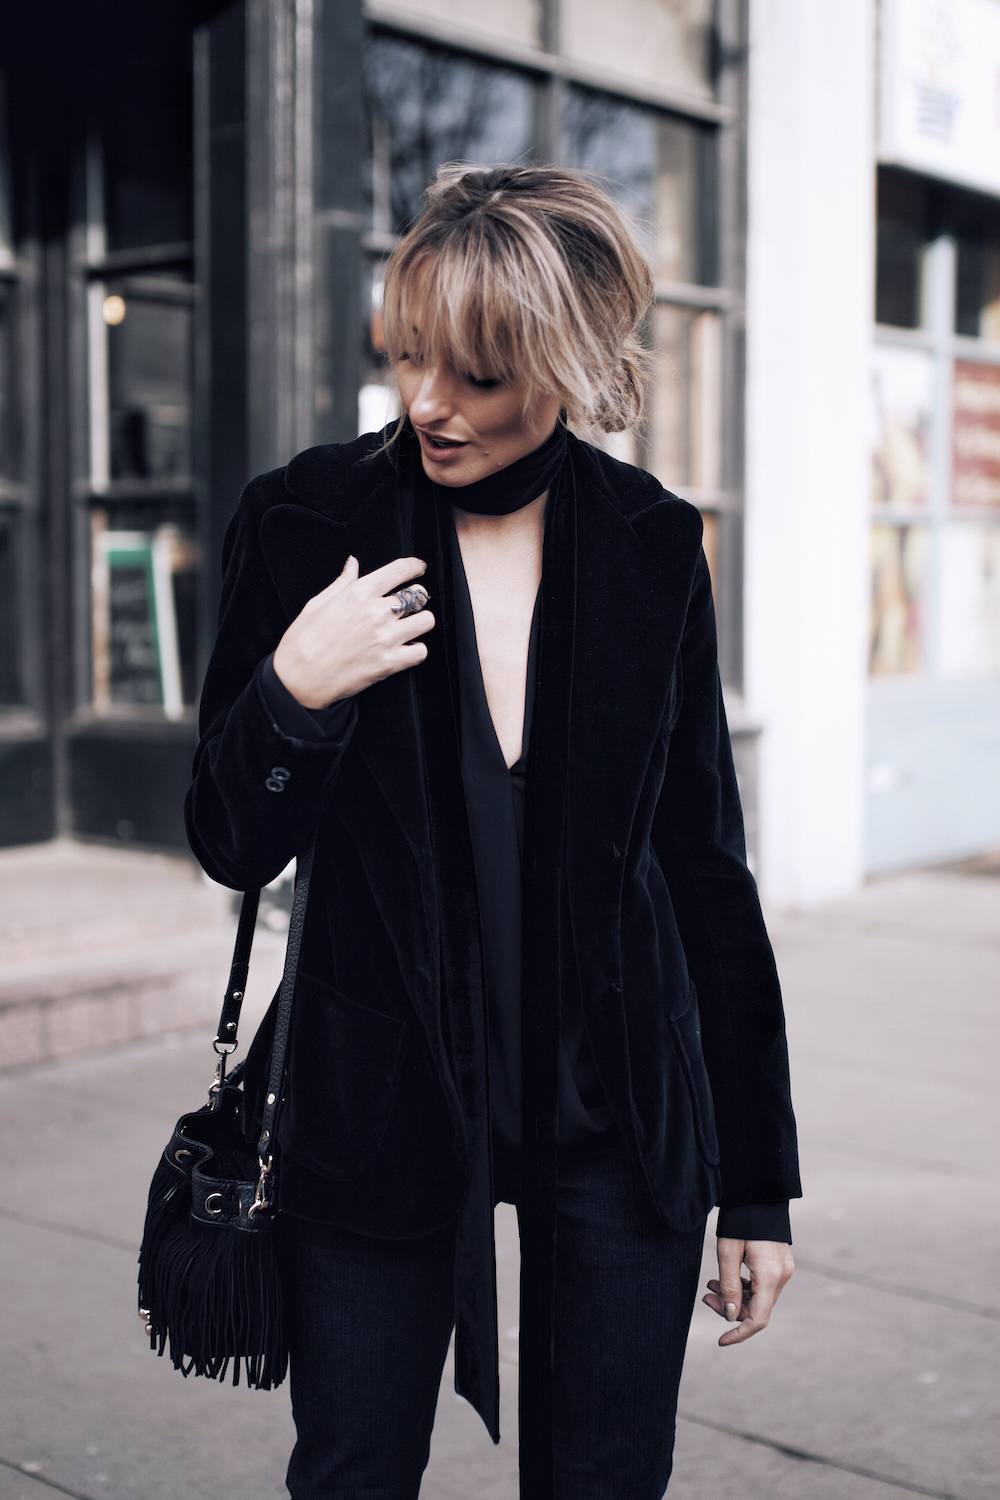 Paris Inspired Outfit Jetset Justine Iaboni Style Blogger 23